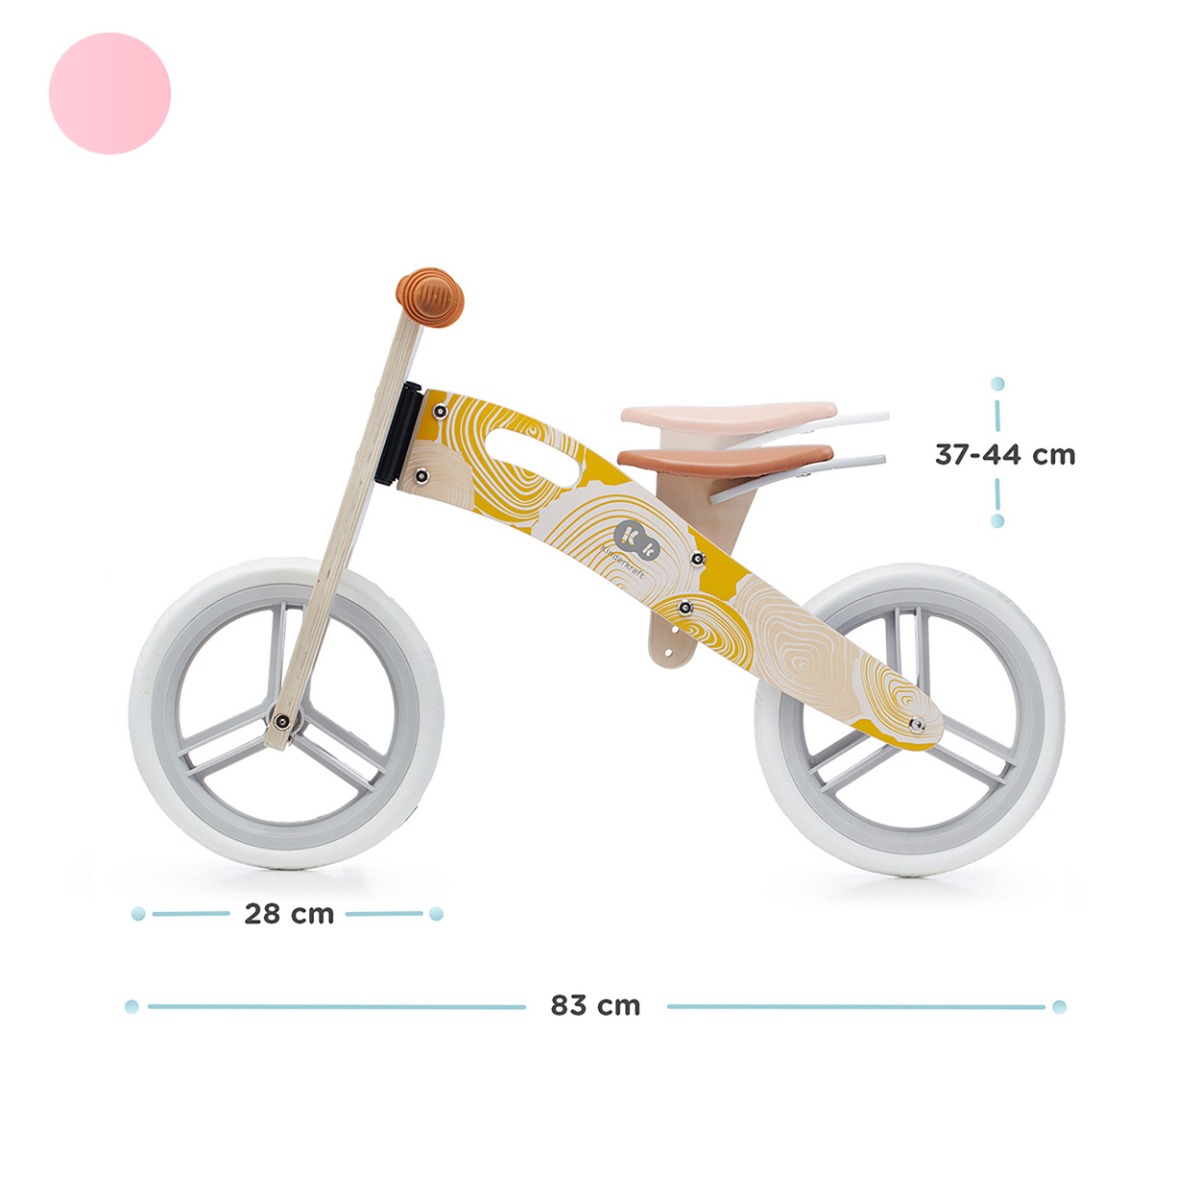 Bicicleta sin pedales Runner 2021